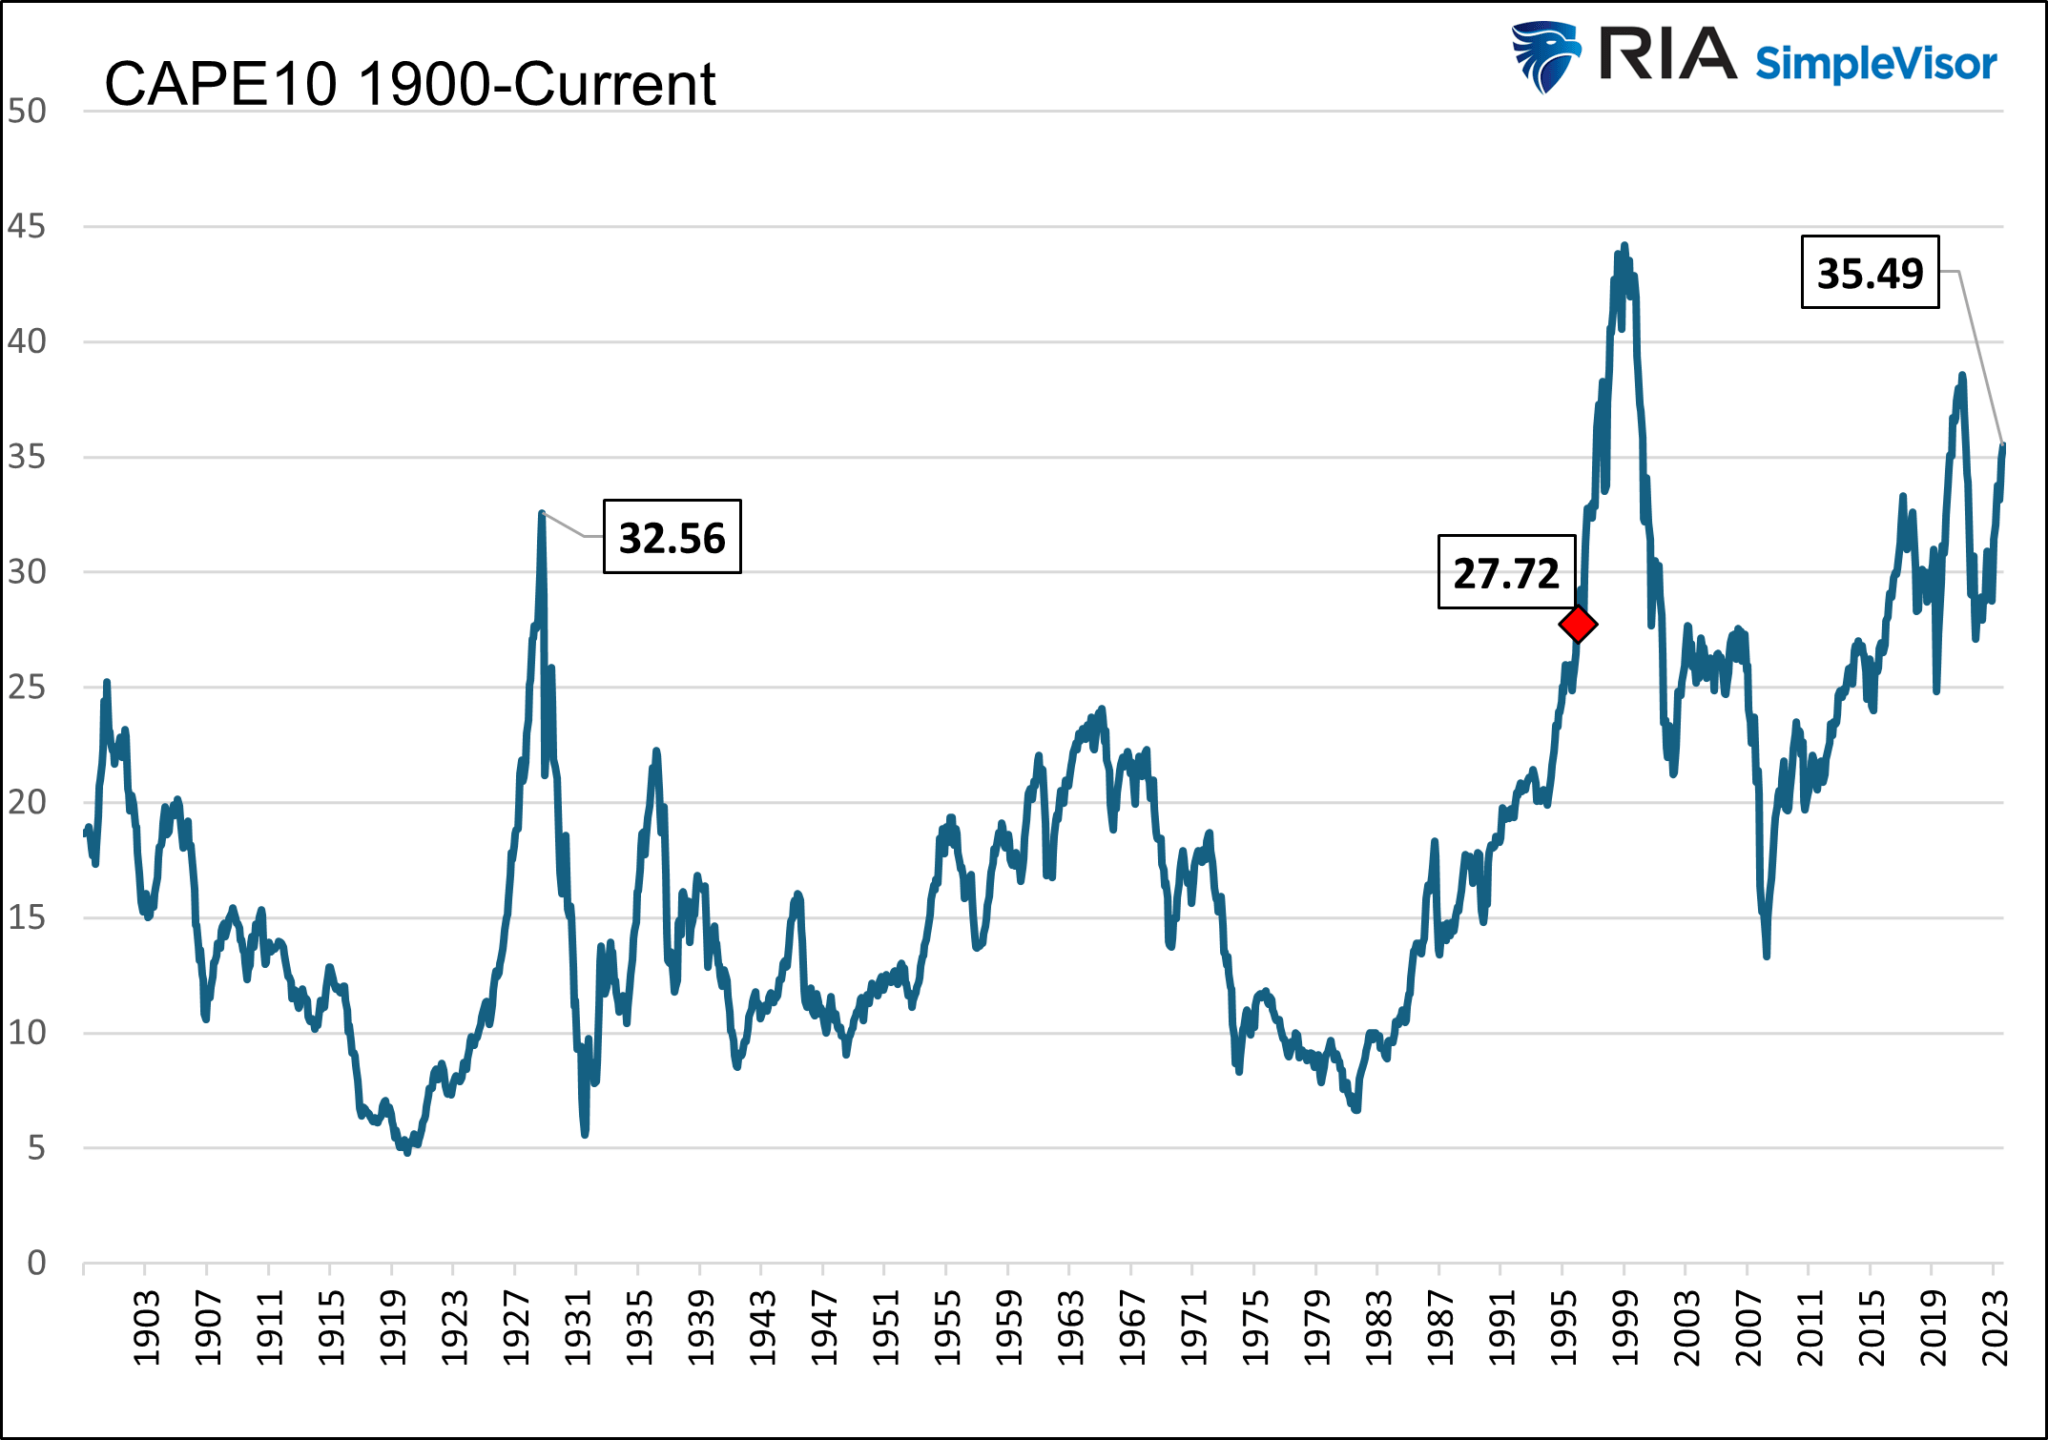 CAPE Valuation-1900-Current